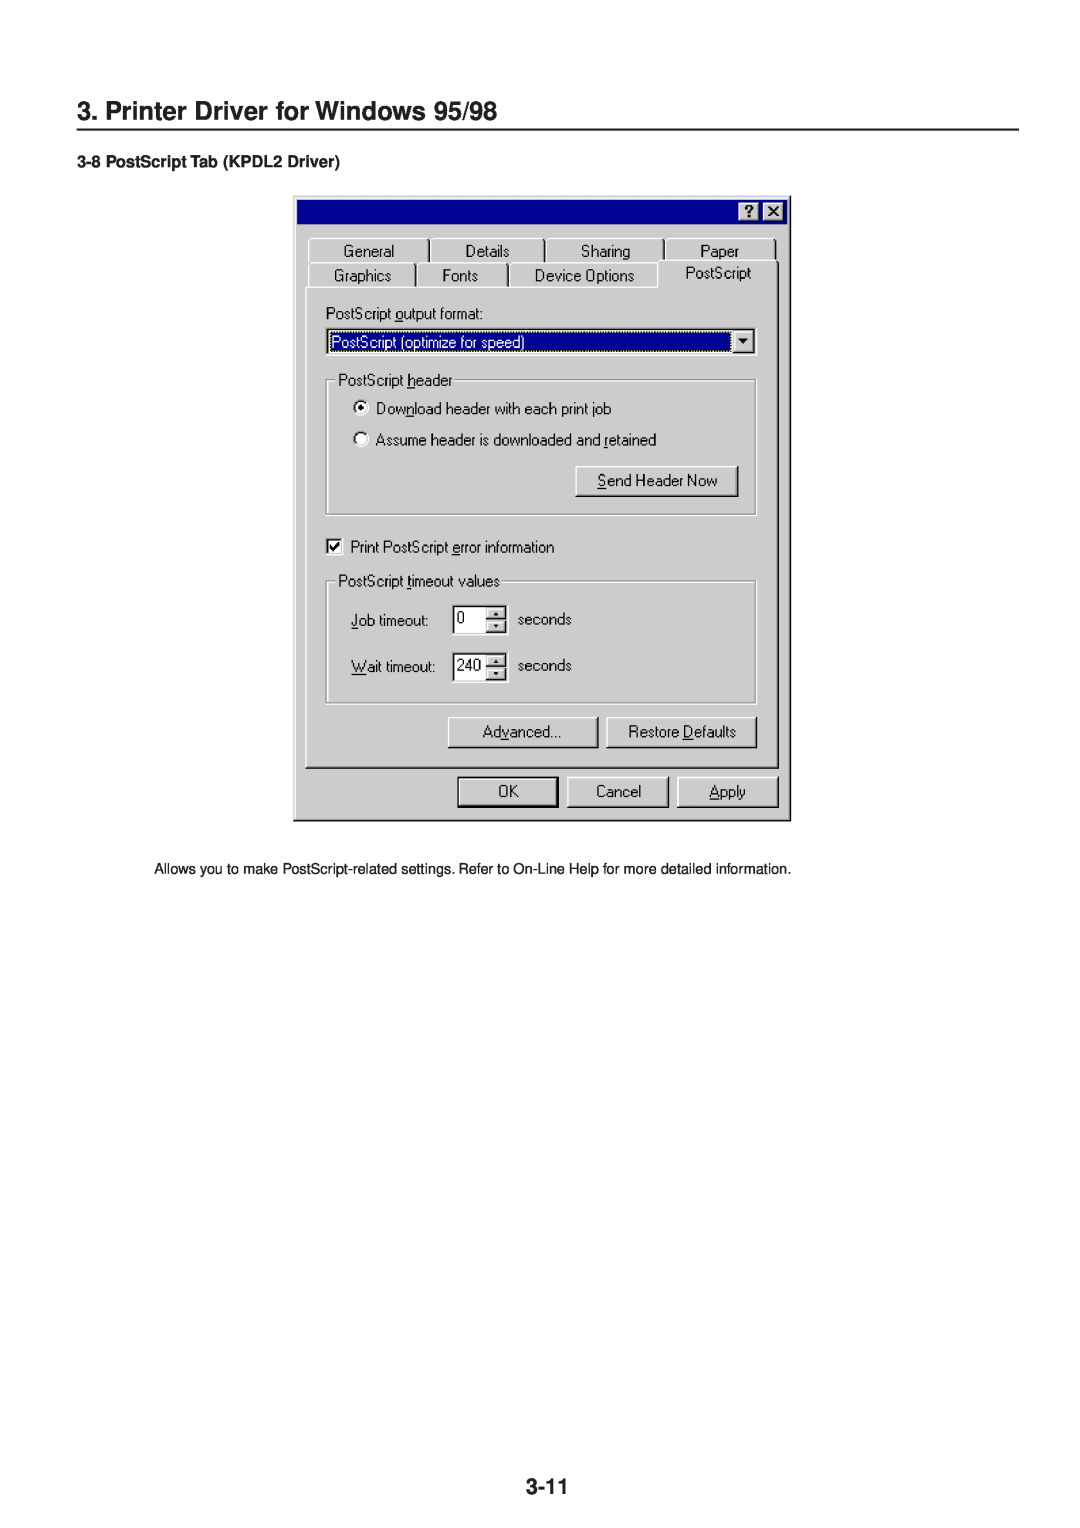 IBM Printing System manual Printer Driver for Windows 95/98, 3-11, PostScript Tab KPDL2 Driver 